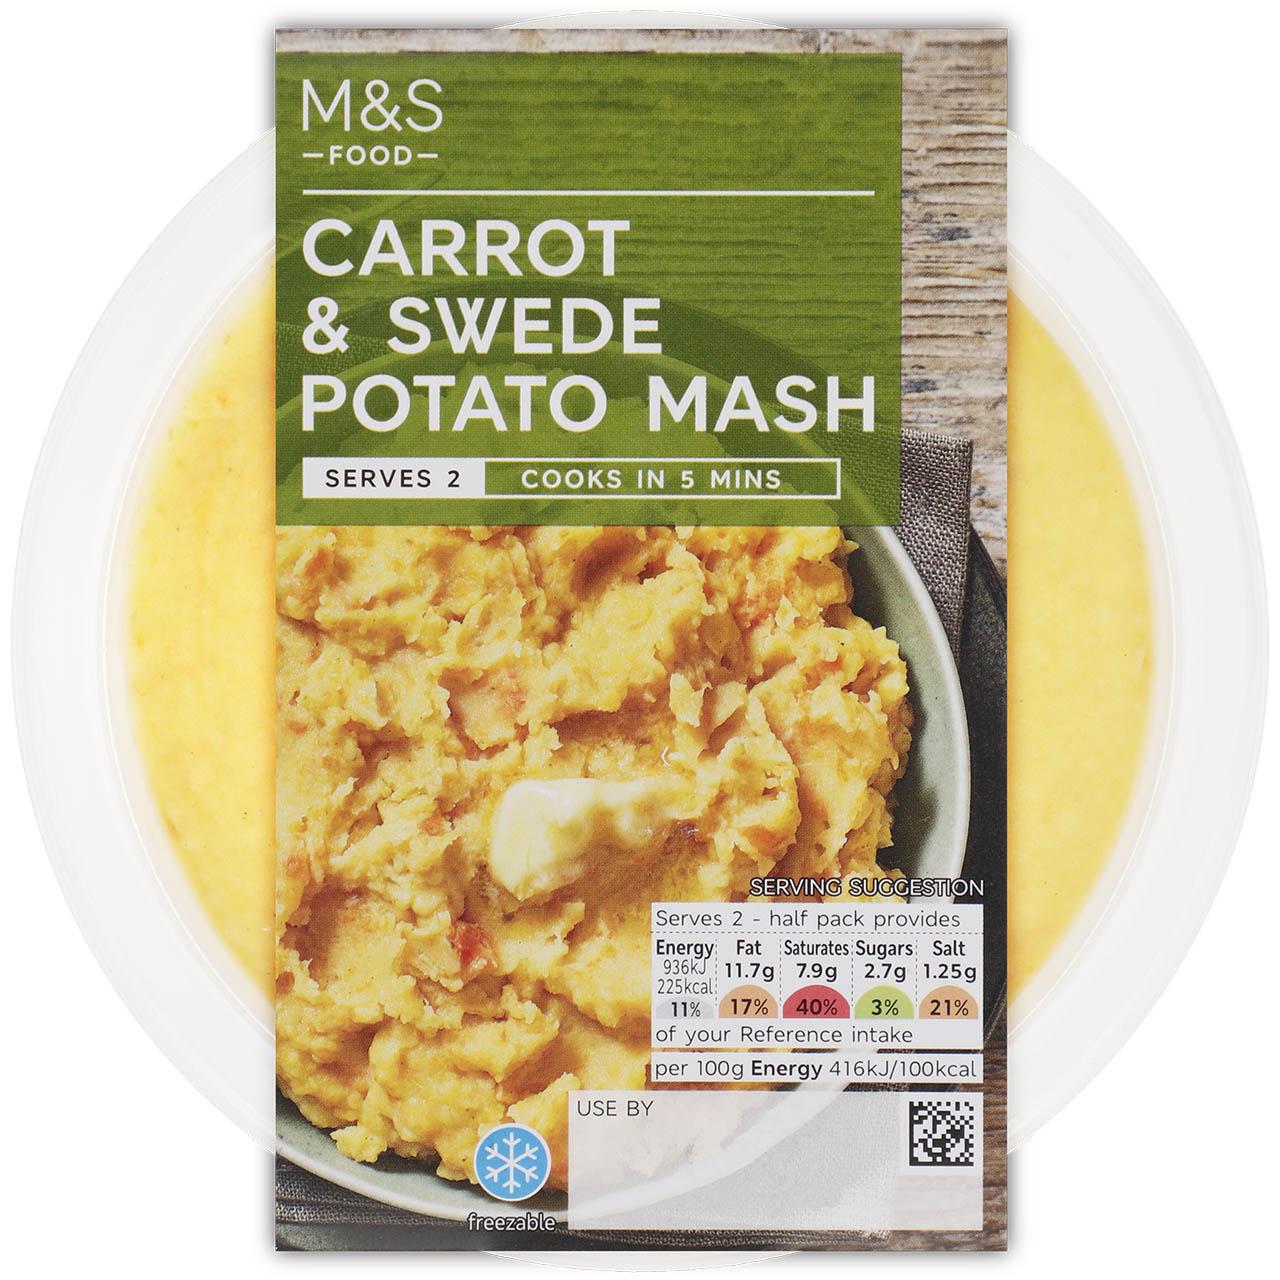 M&S Carrot & Swede Potato Mash 450g